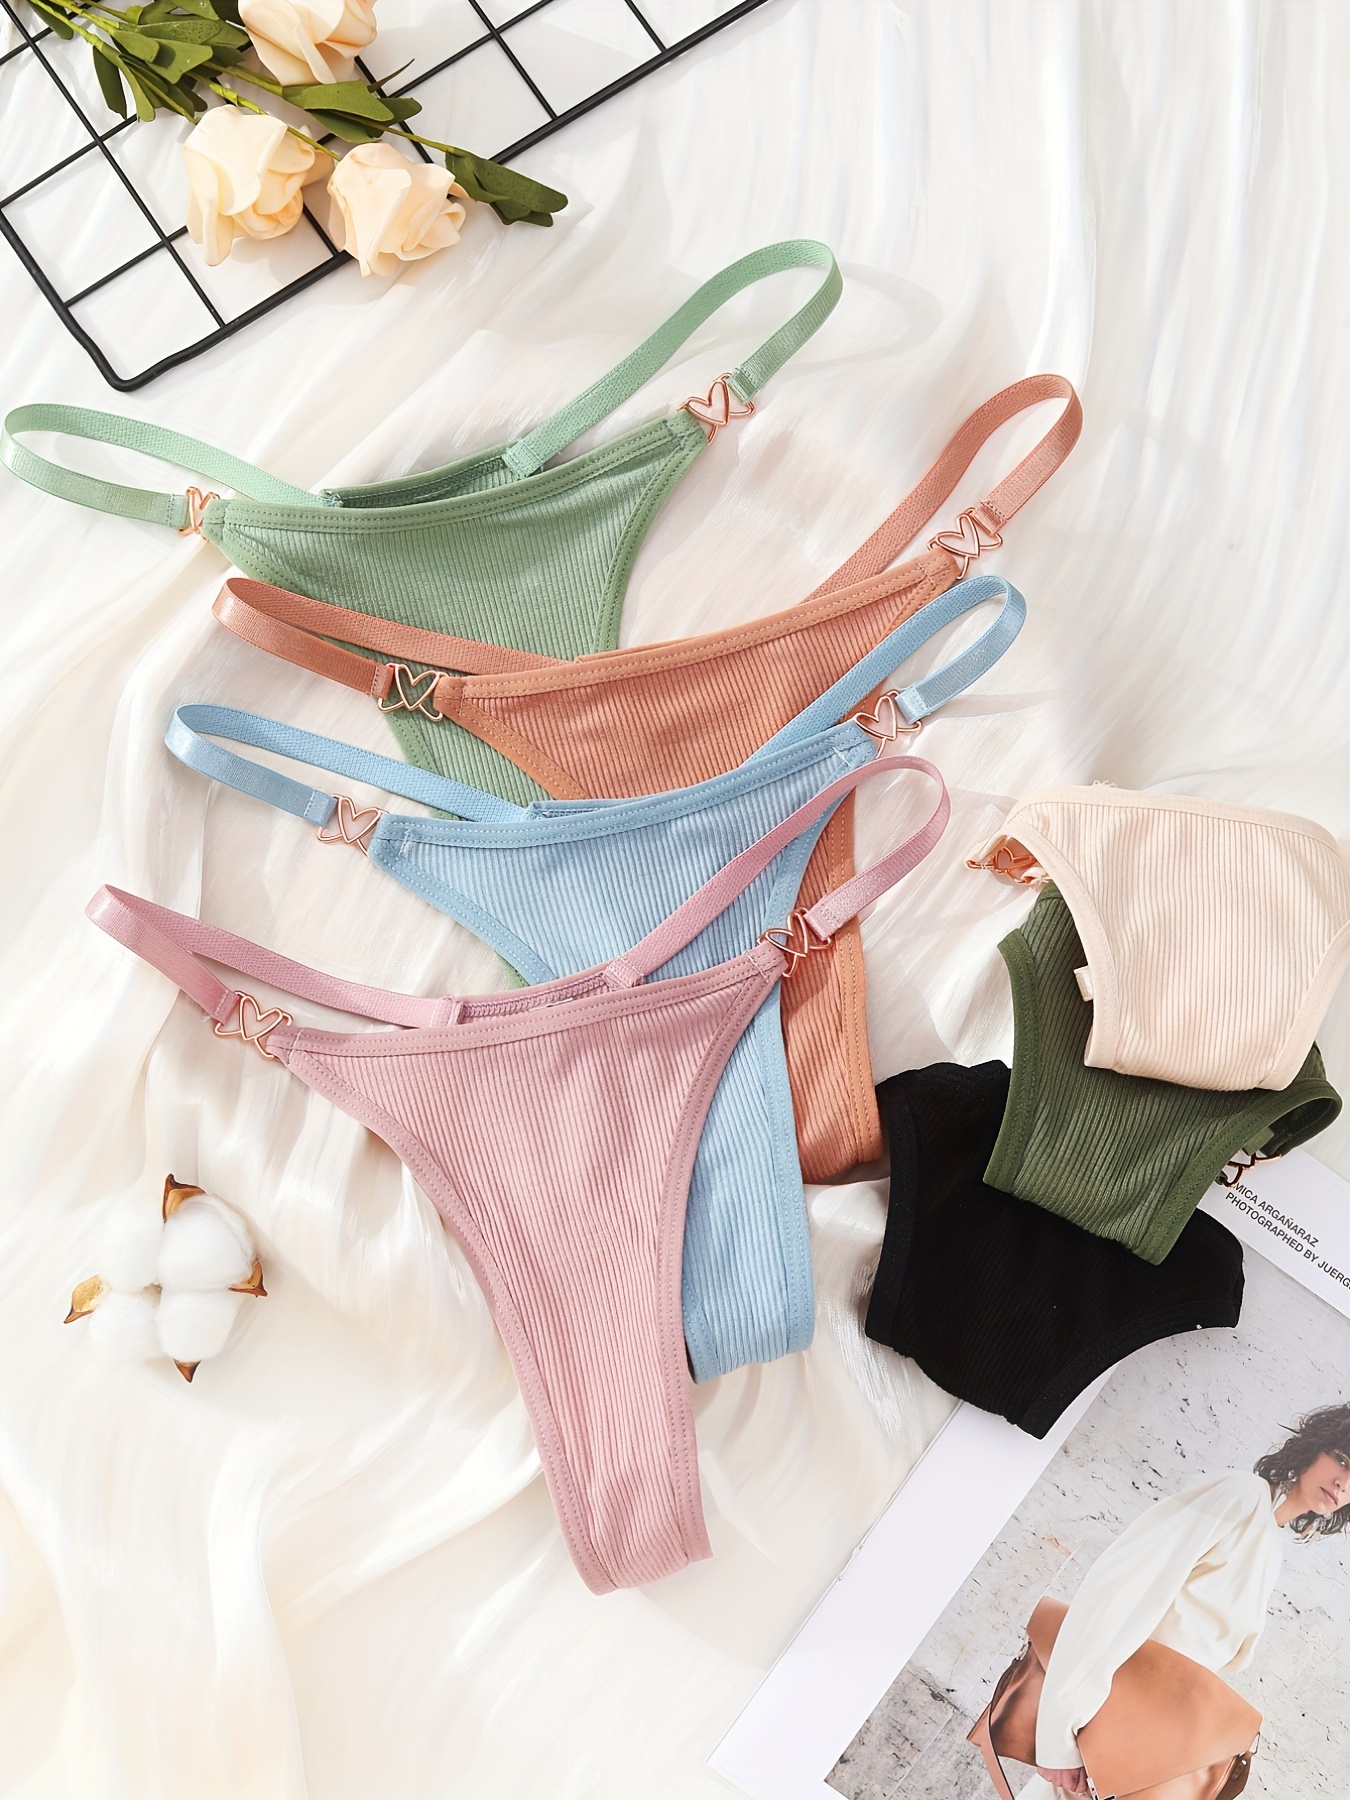 FINETOO 3pcs/Set Women's Cotton Thong Lace Bikini Panties S-XL Soft Female  Lingerie